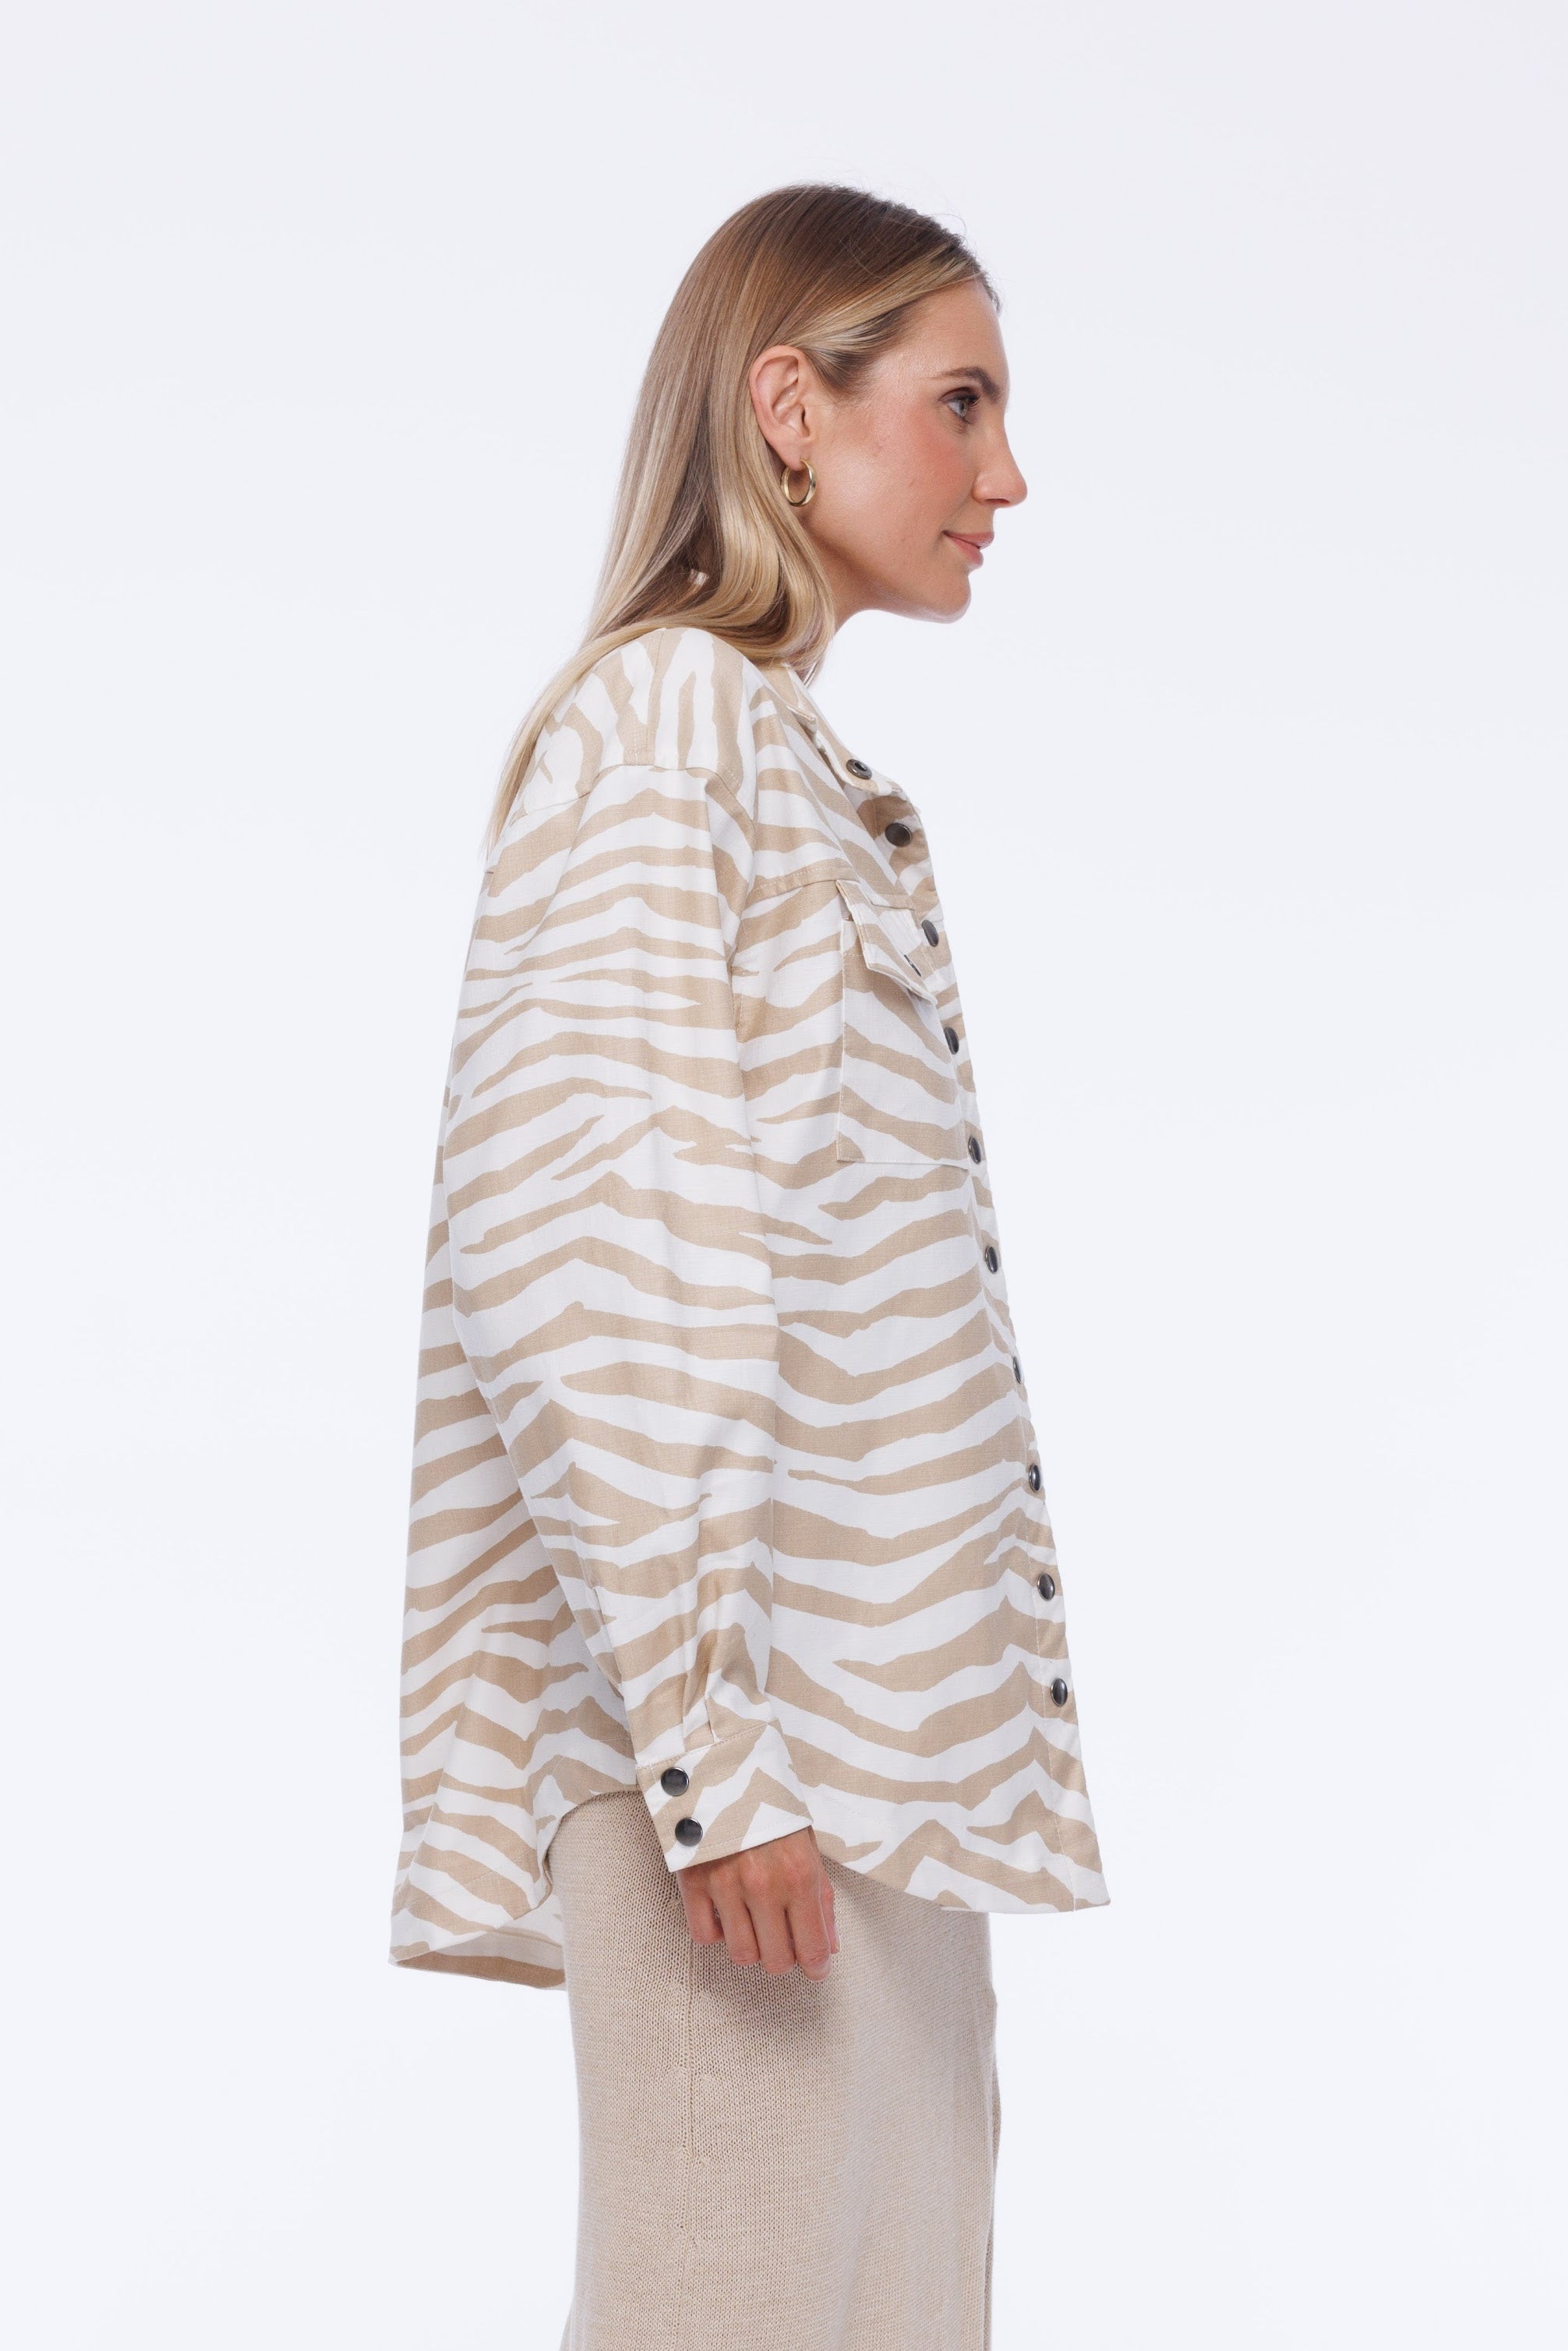 Run Wild Jacket - Ivory/Camel Zebra Print